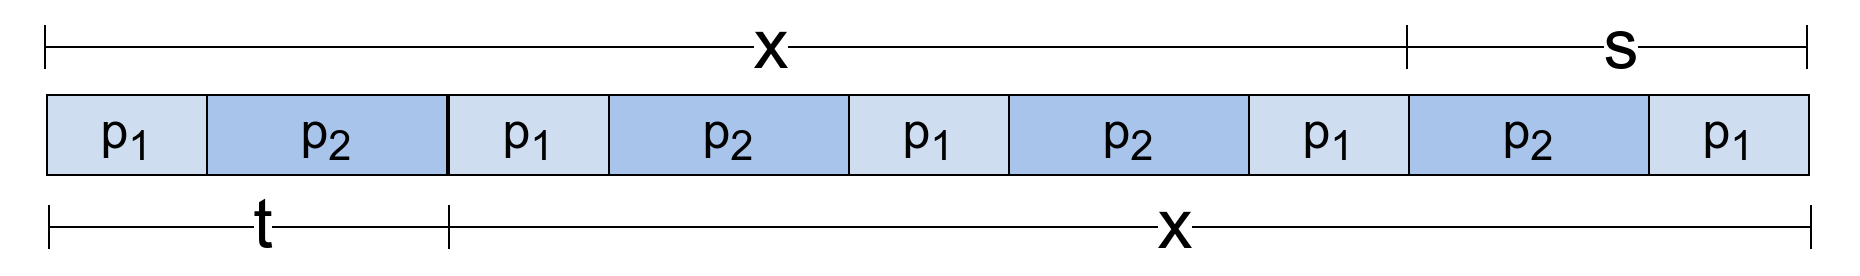 Slika 7: x je prefiks-sufiks periodične niske koji se prostire preko njene sredine.